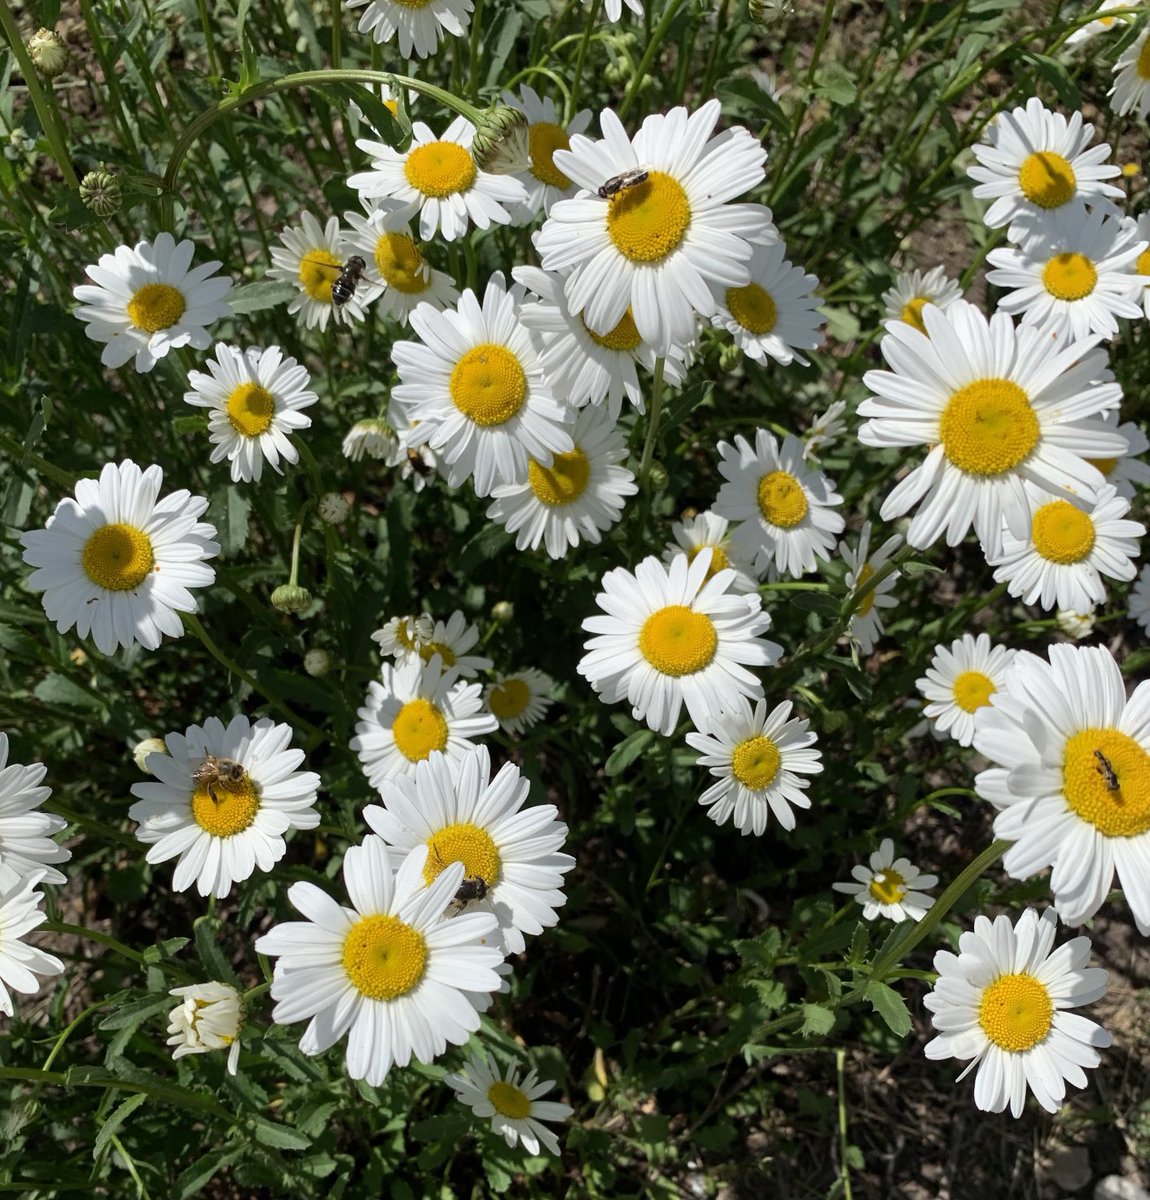 Pollinators loving some wild daisies #SaveTheBees #Flowers #FlowerReport 🌼